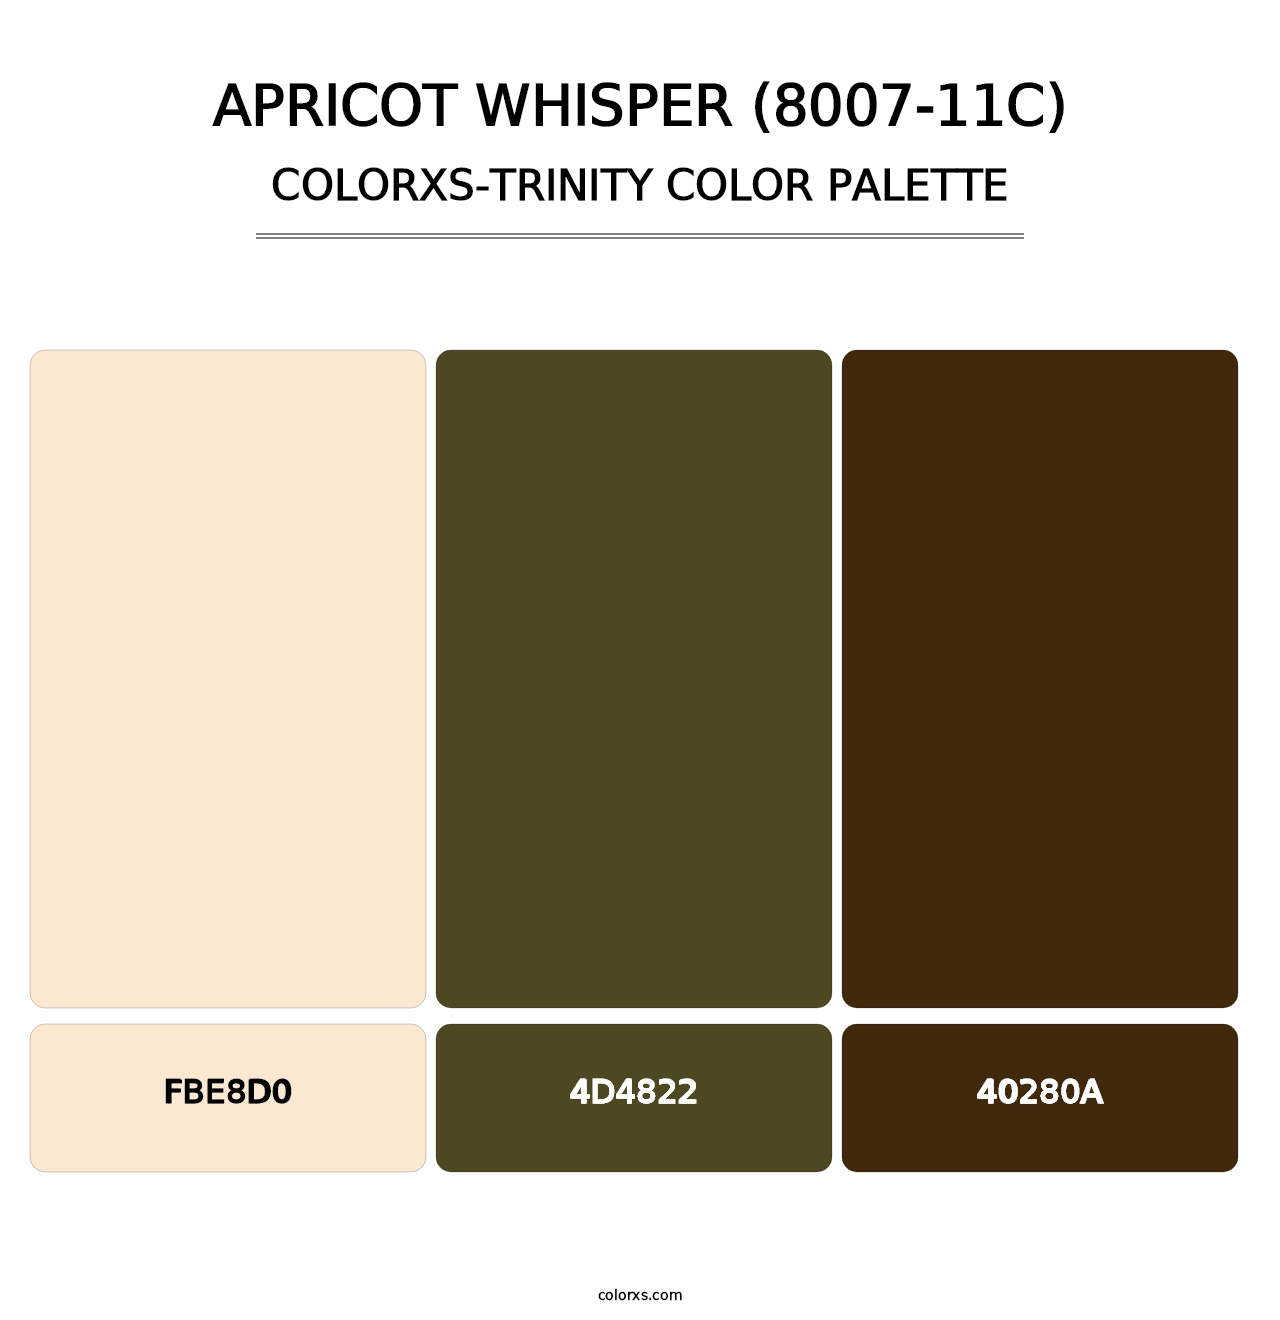 Apricot Whisper (8007-11C) - Colorxs Trinity Palette